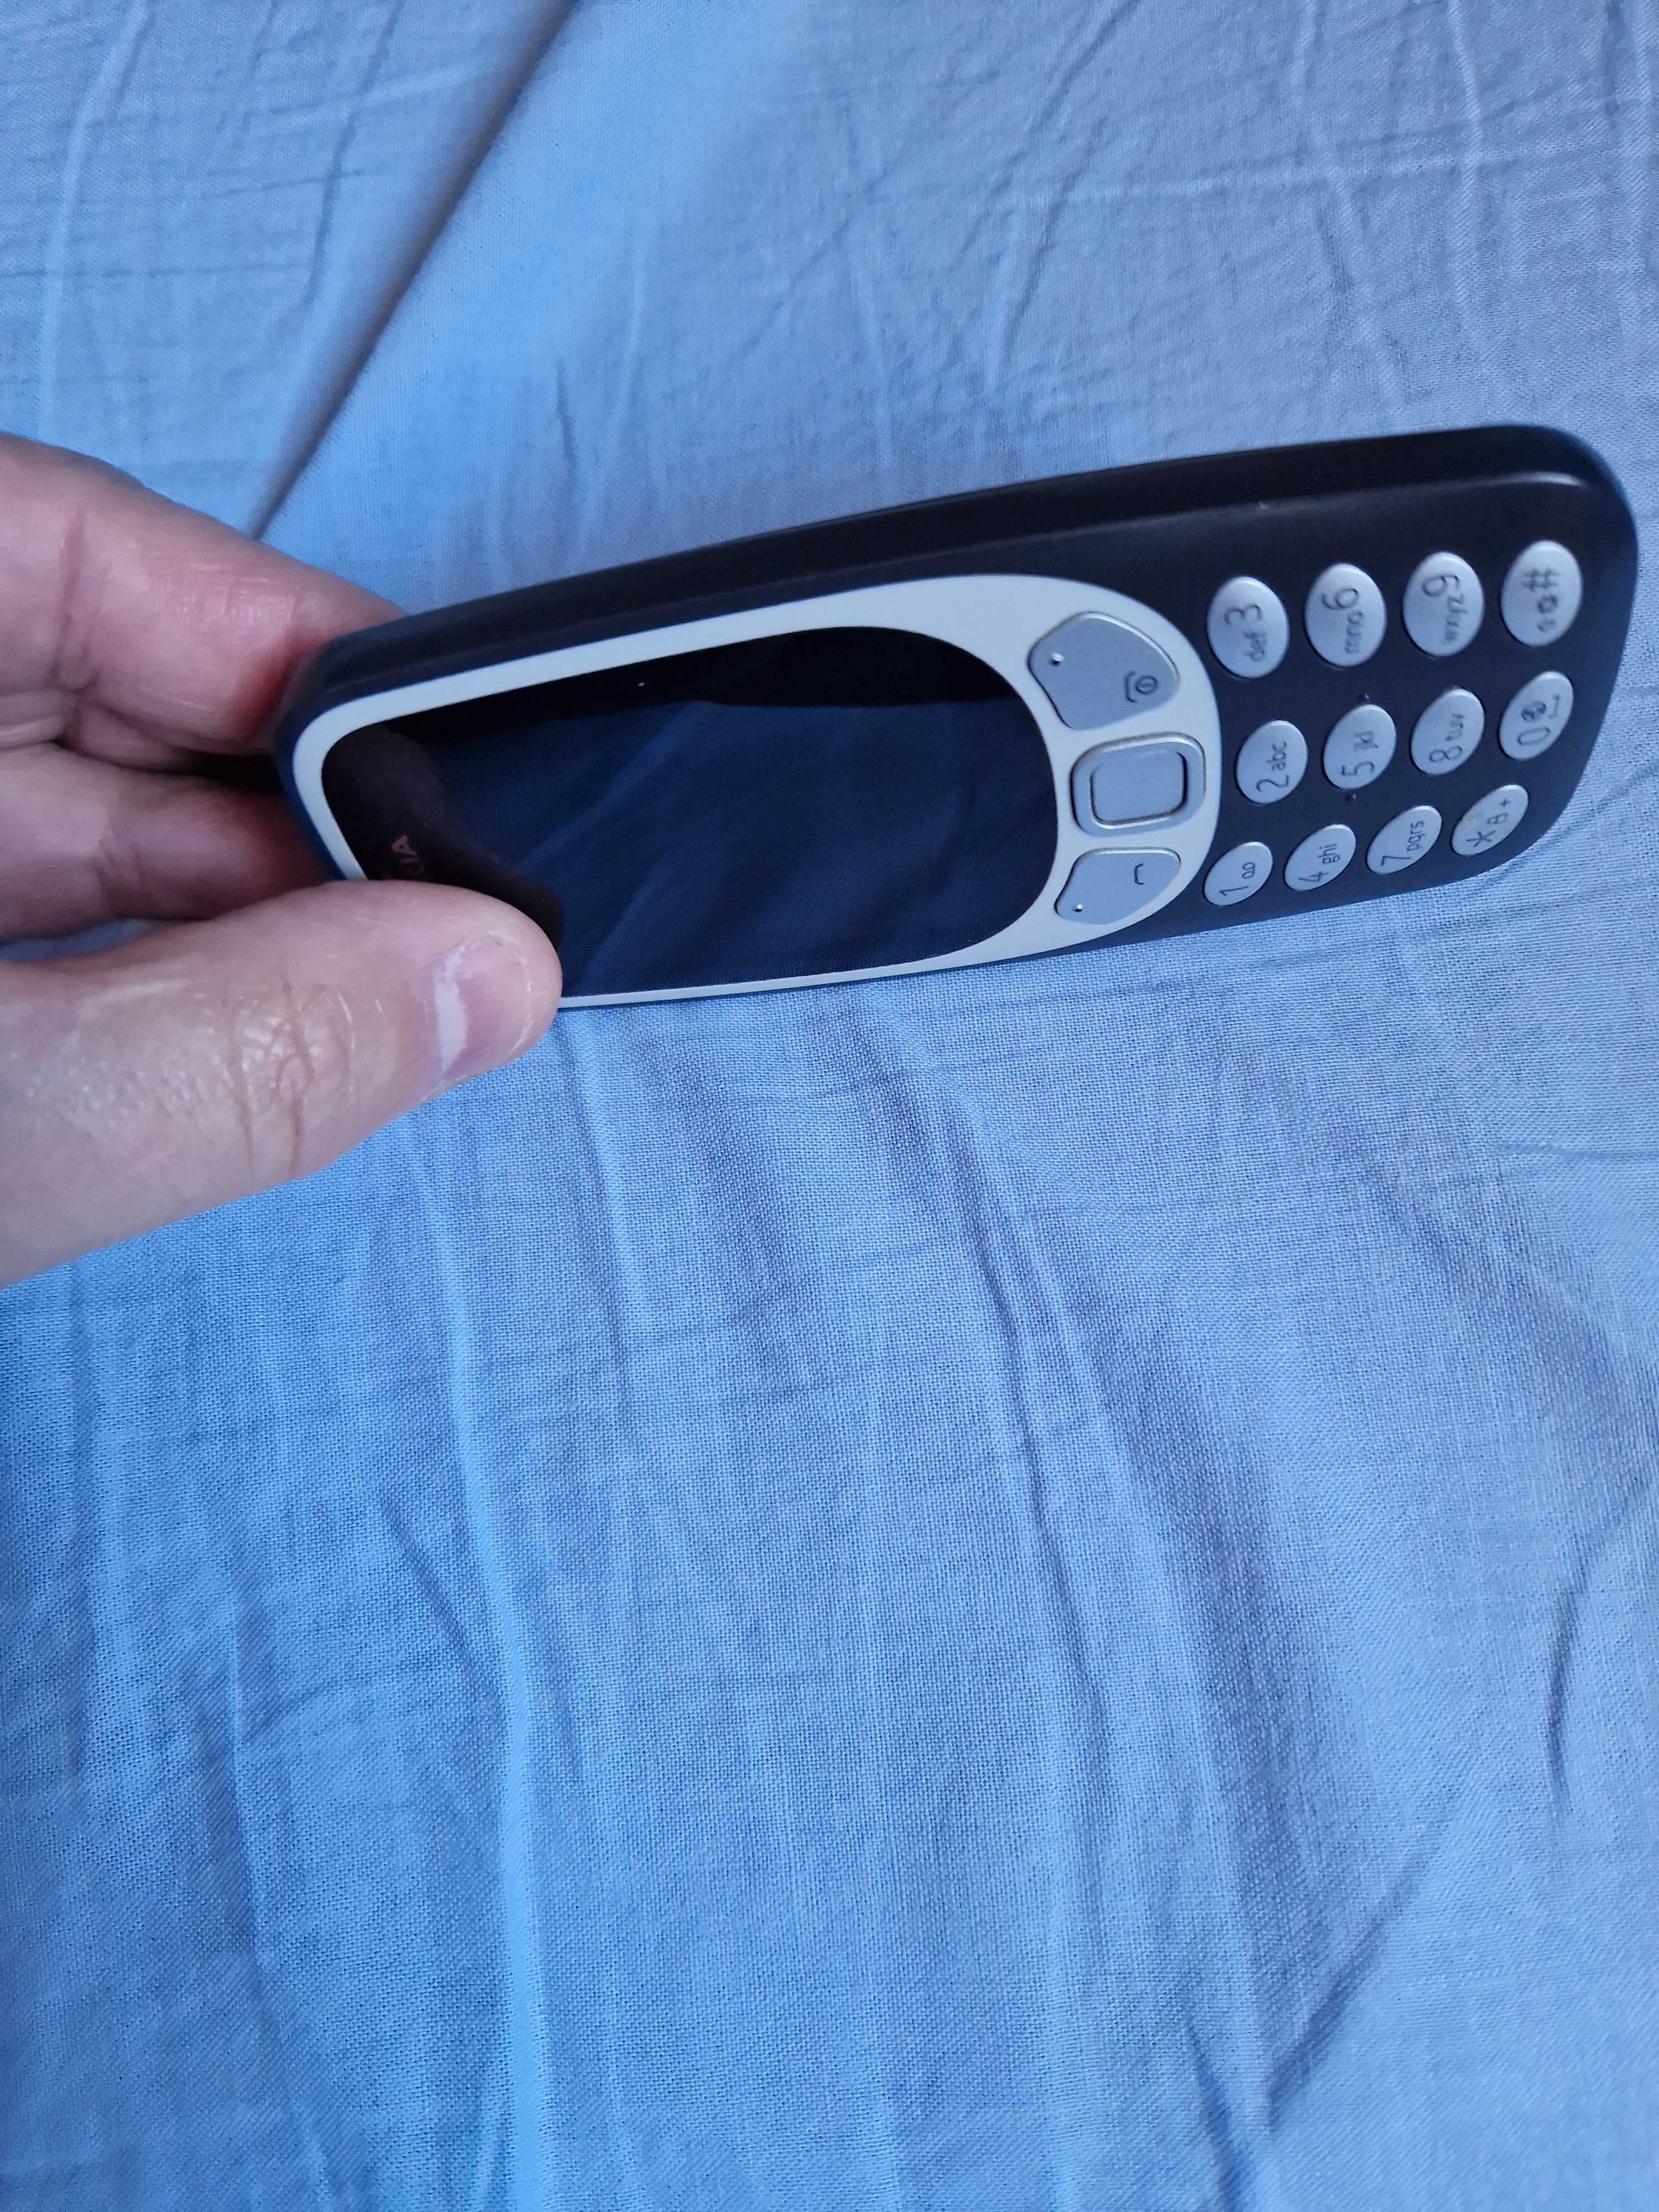 Vand Nokia 3310i Dark Blue Dual Sim si DWD Philips.